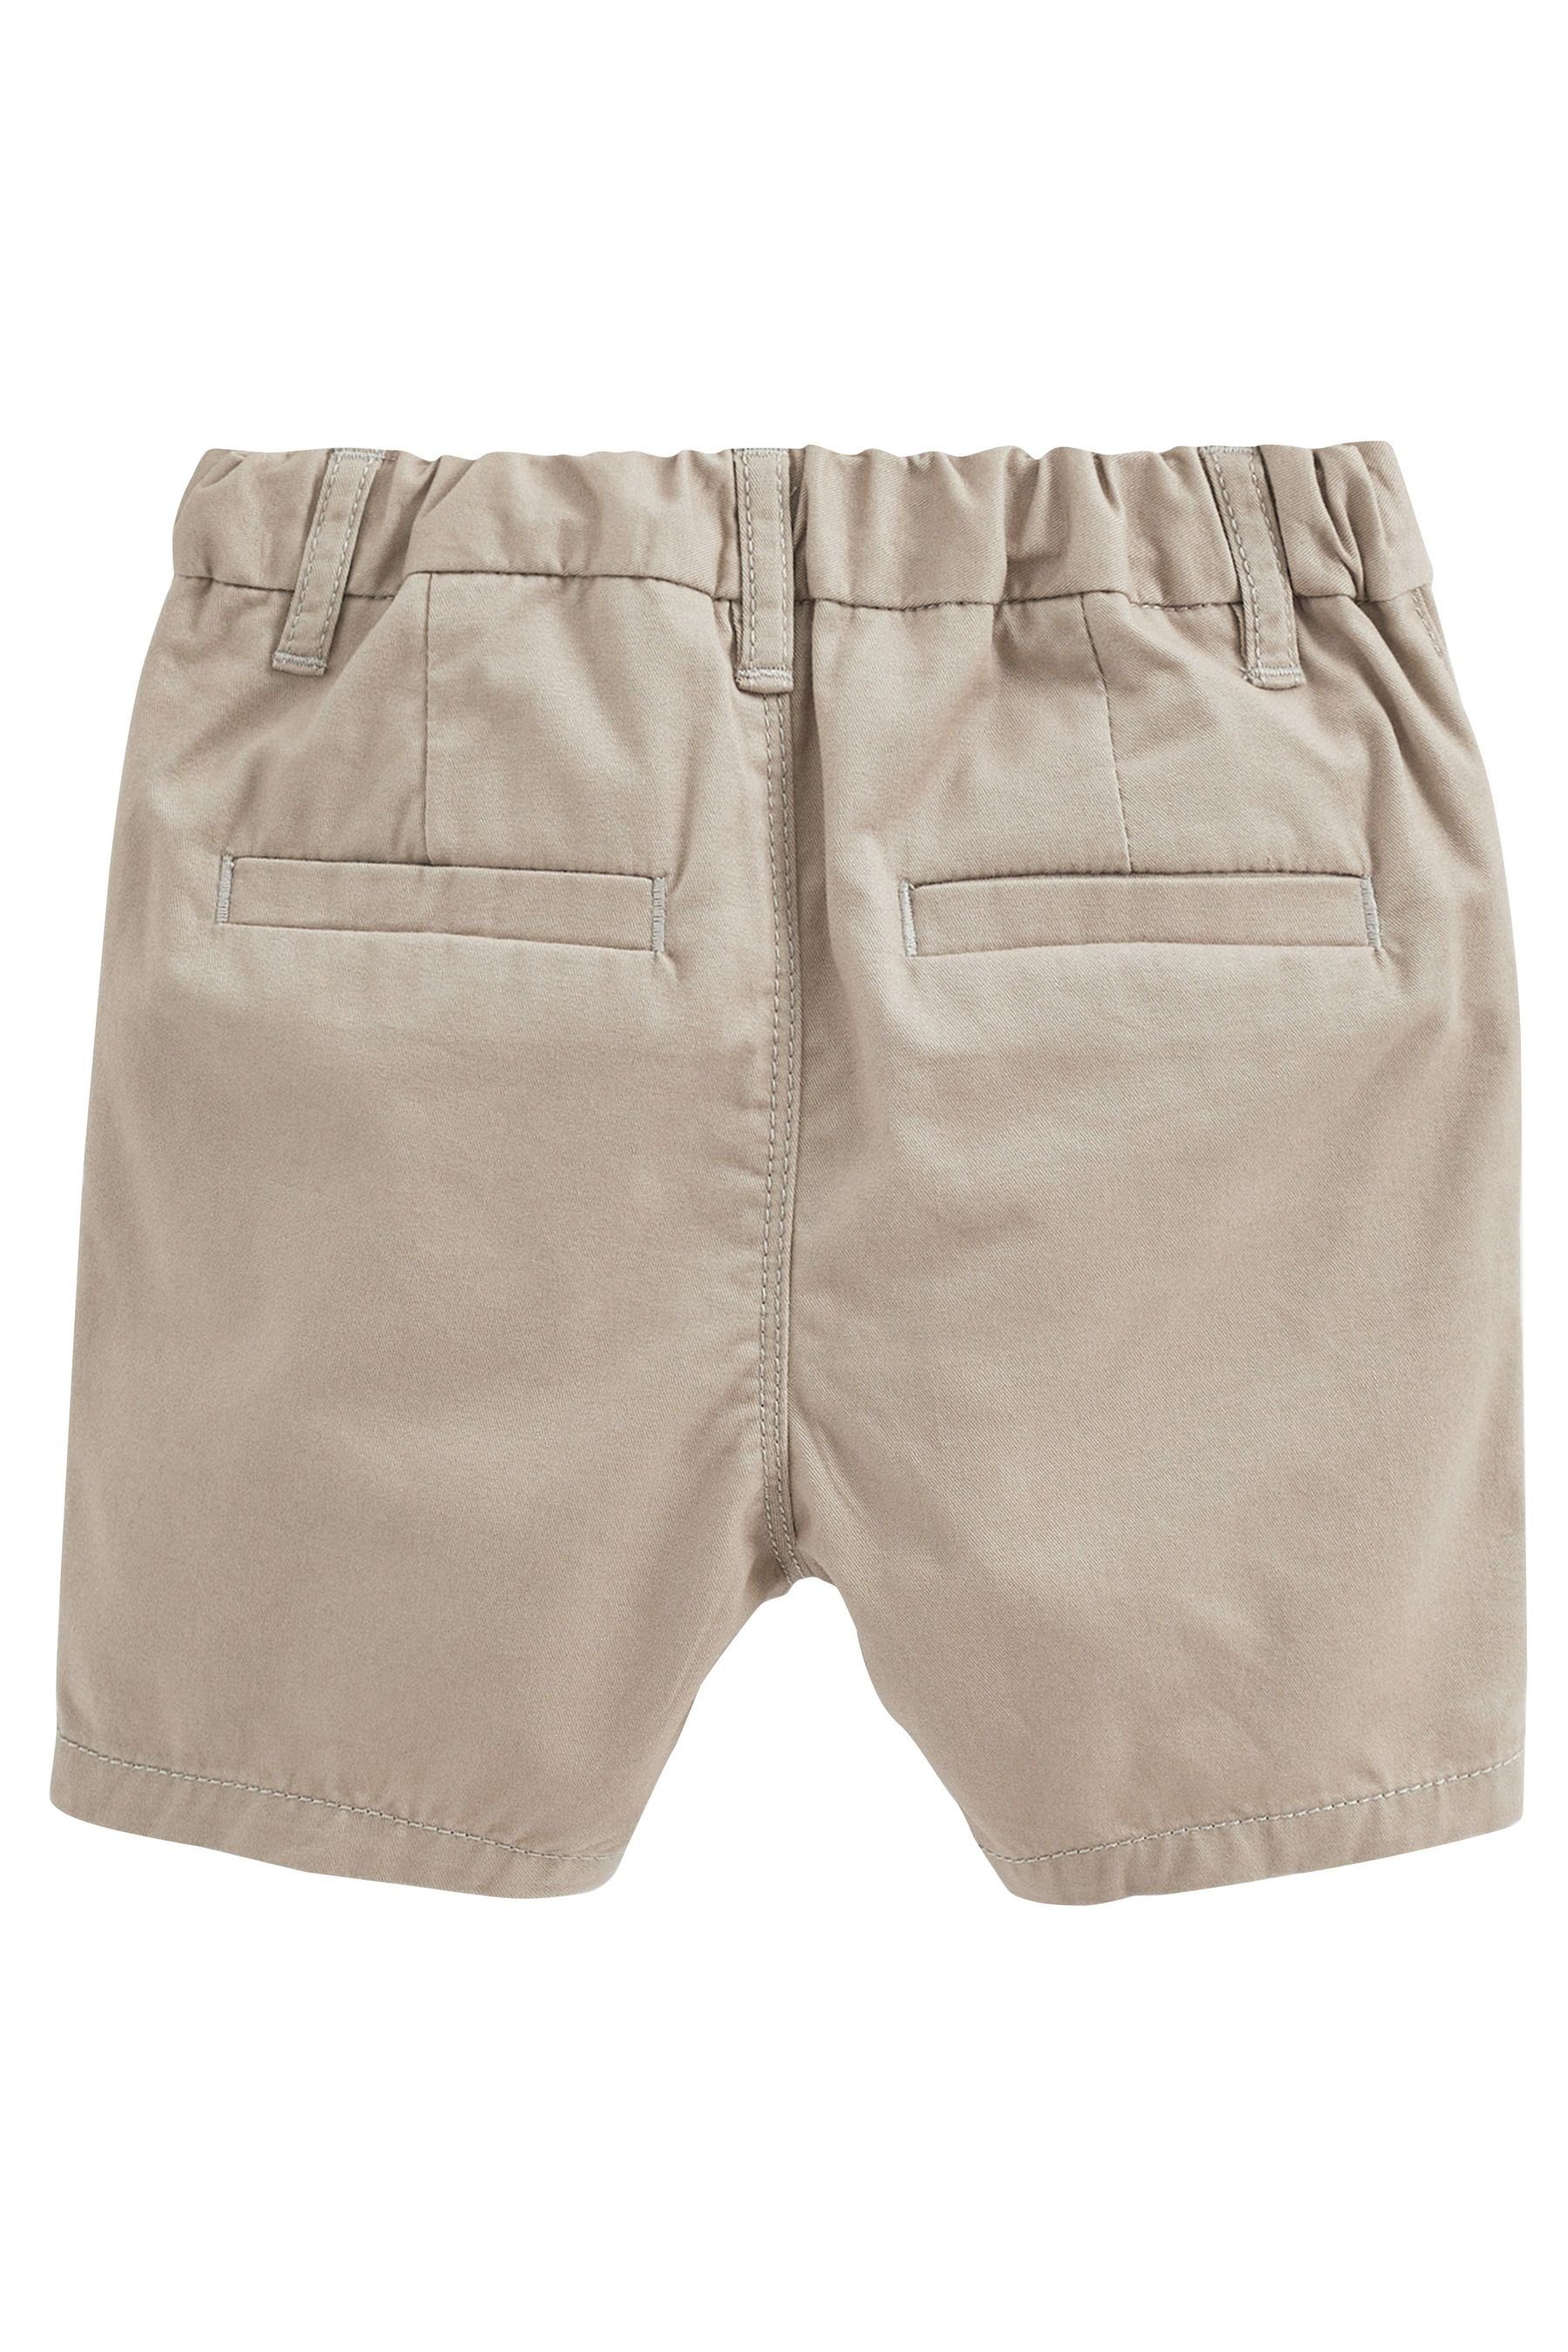 Navy Blue/Stone Chino-Shorts, Next Pack Natural 2er (2-tlg) Chinoshorts